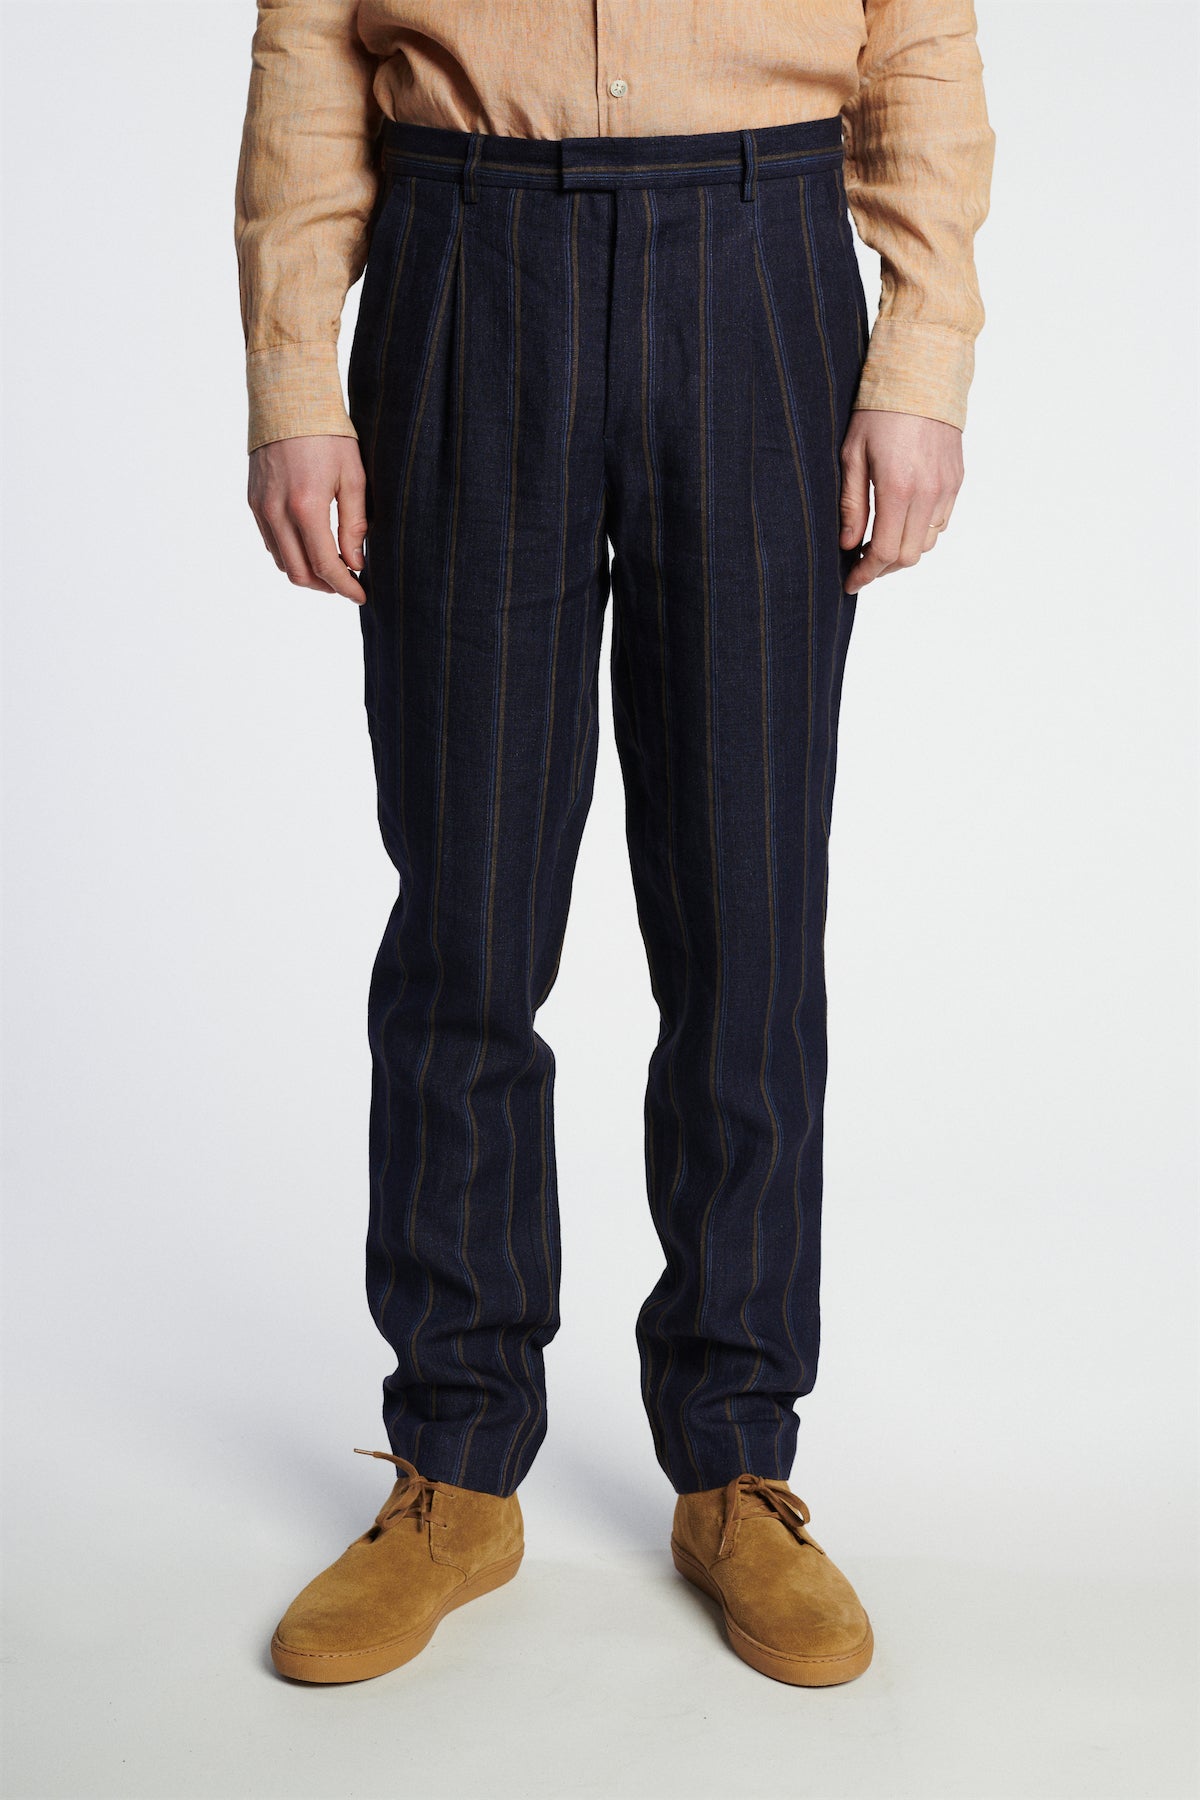 Bohemian trousers in a Navy and Tonal Brown Blue Stripe Italian Linen